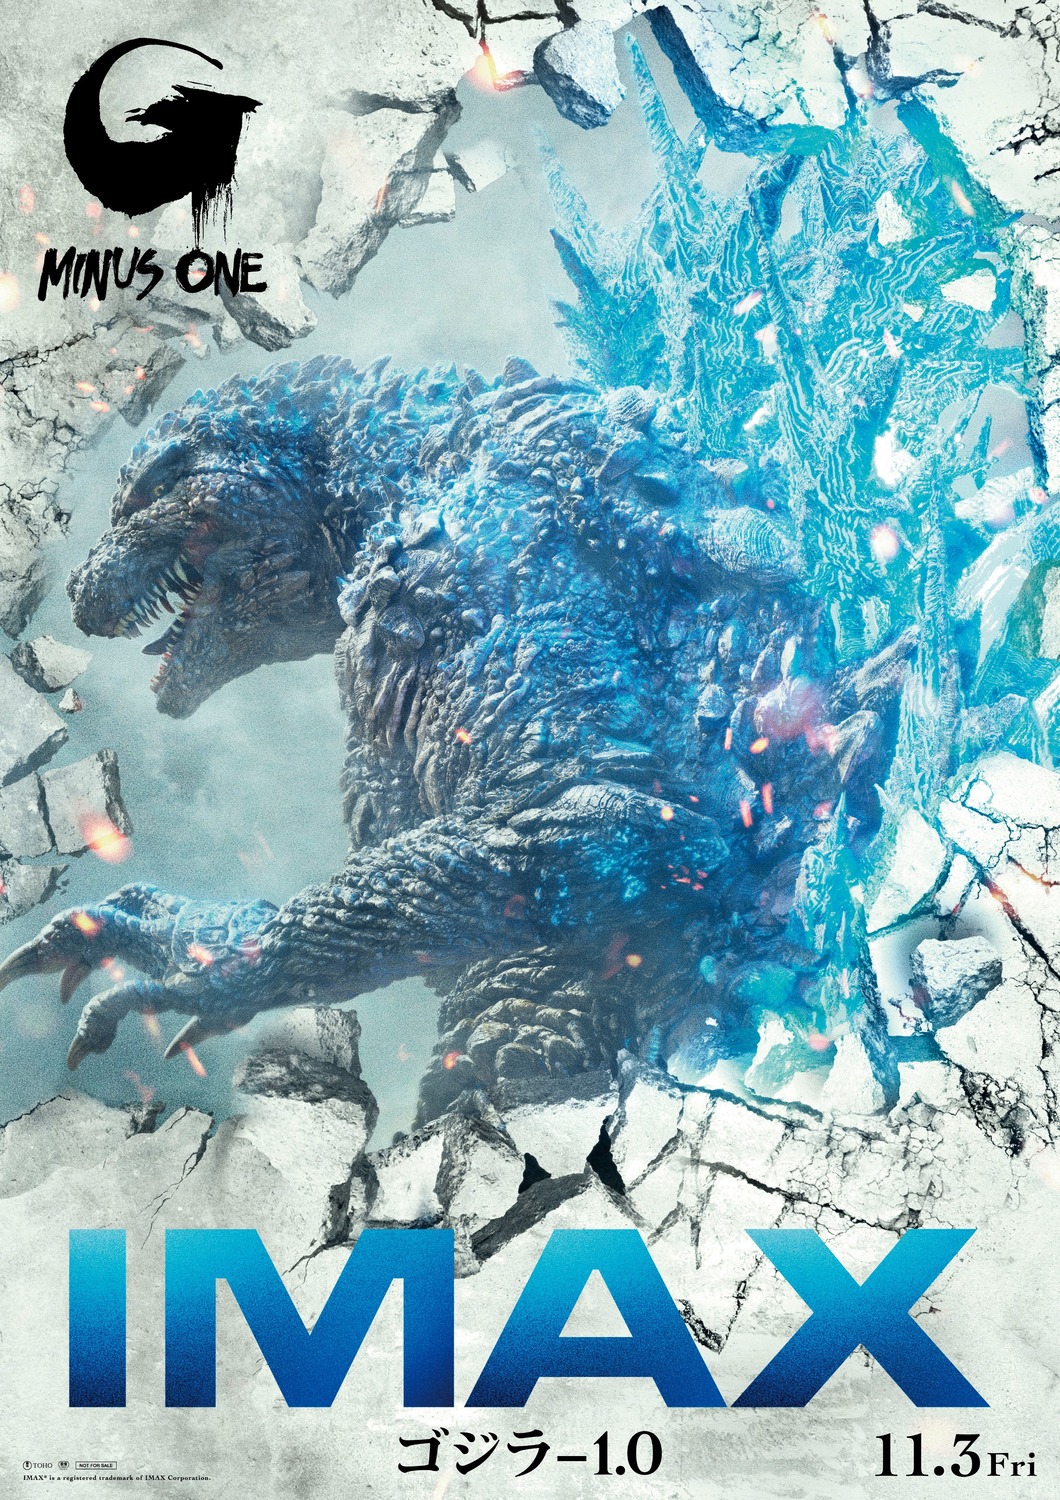 Extra Large Movie Poster Image for Godzilla: Minus One (#2 of 11)